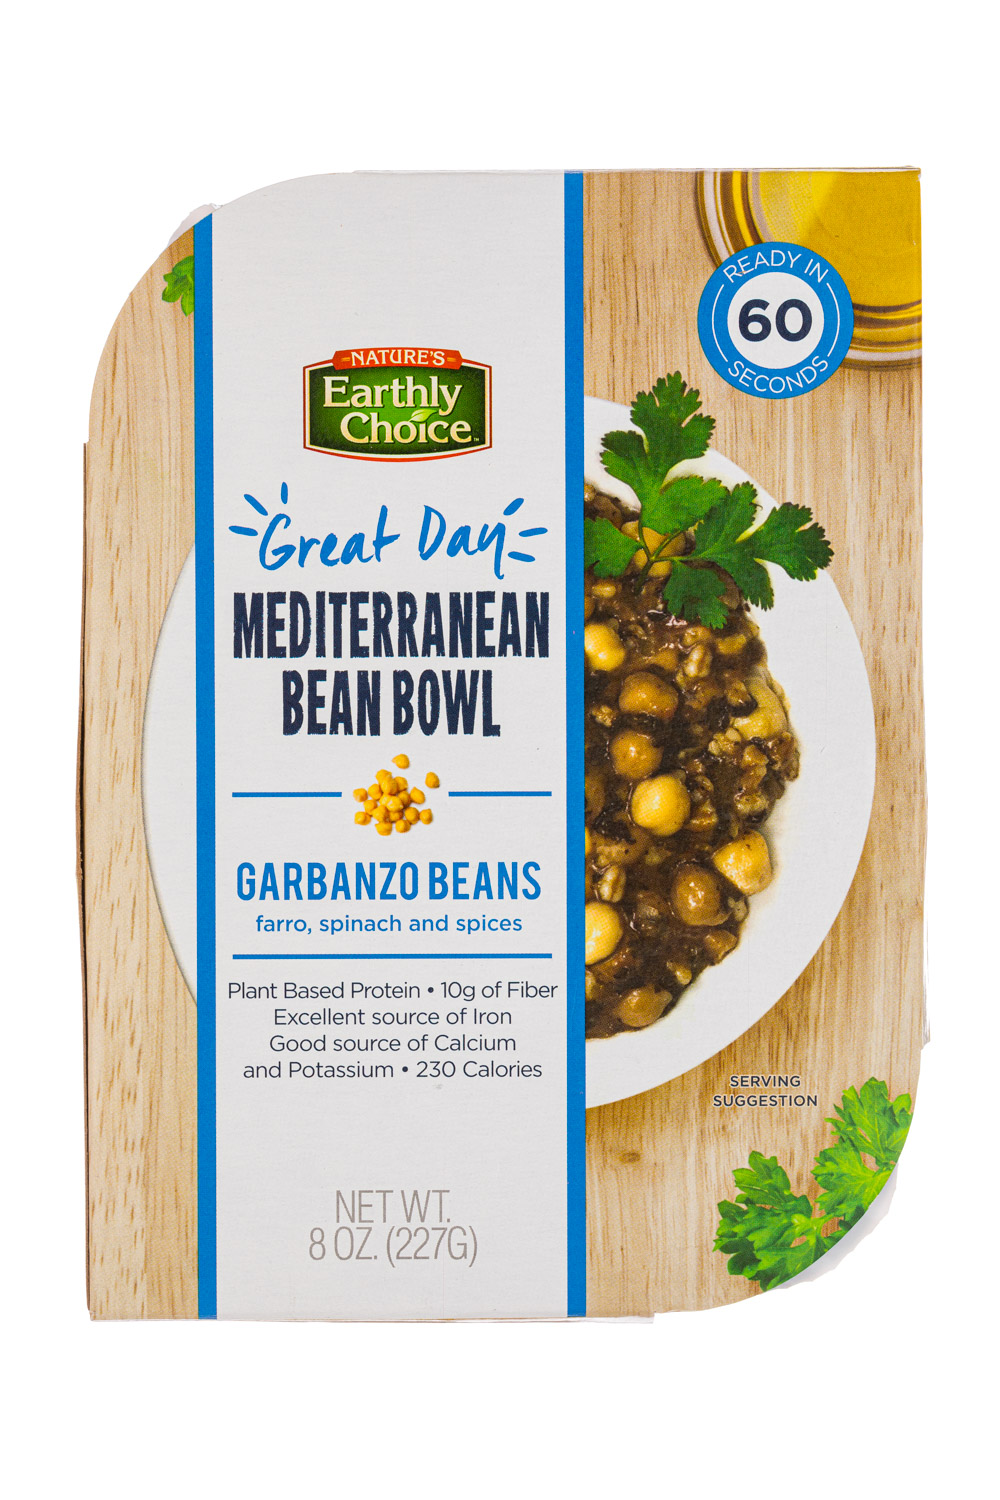 Mediterranean Bea Bowl